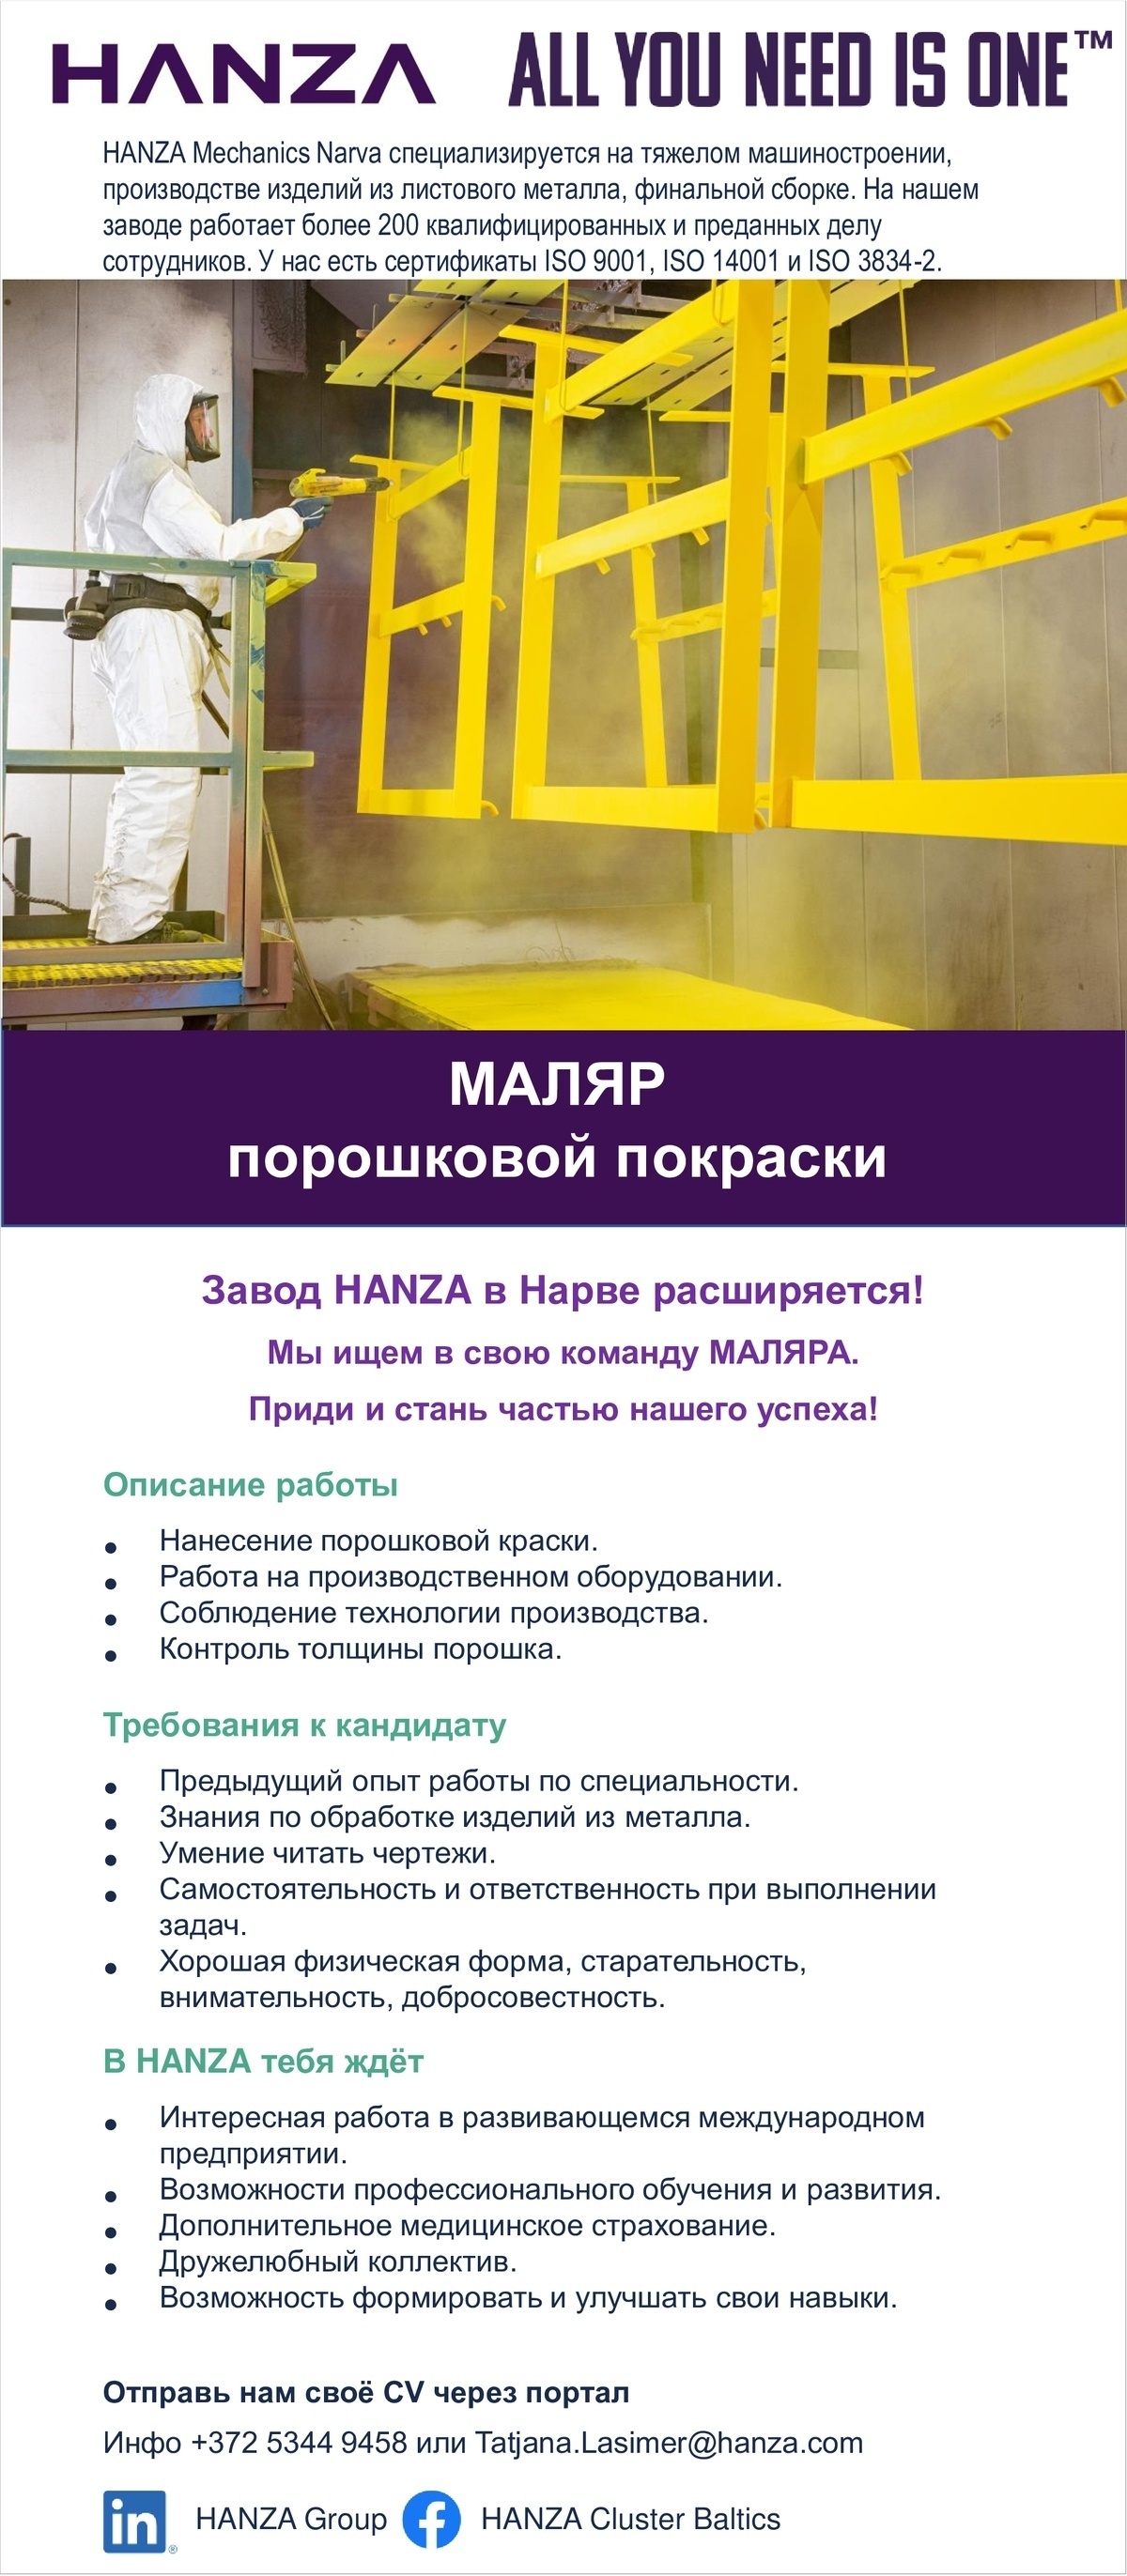 HANZA Mechanics Narva AS Маляр порошковой покраски